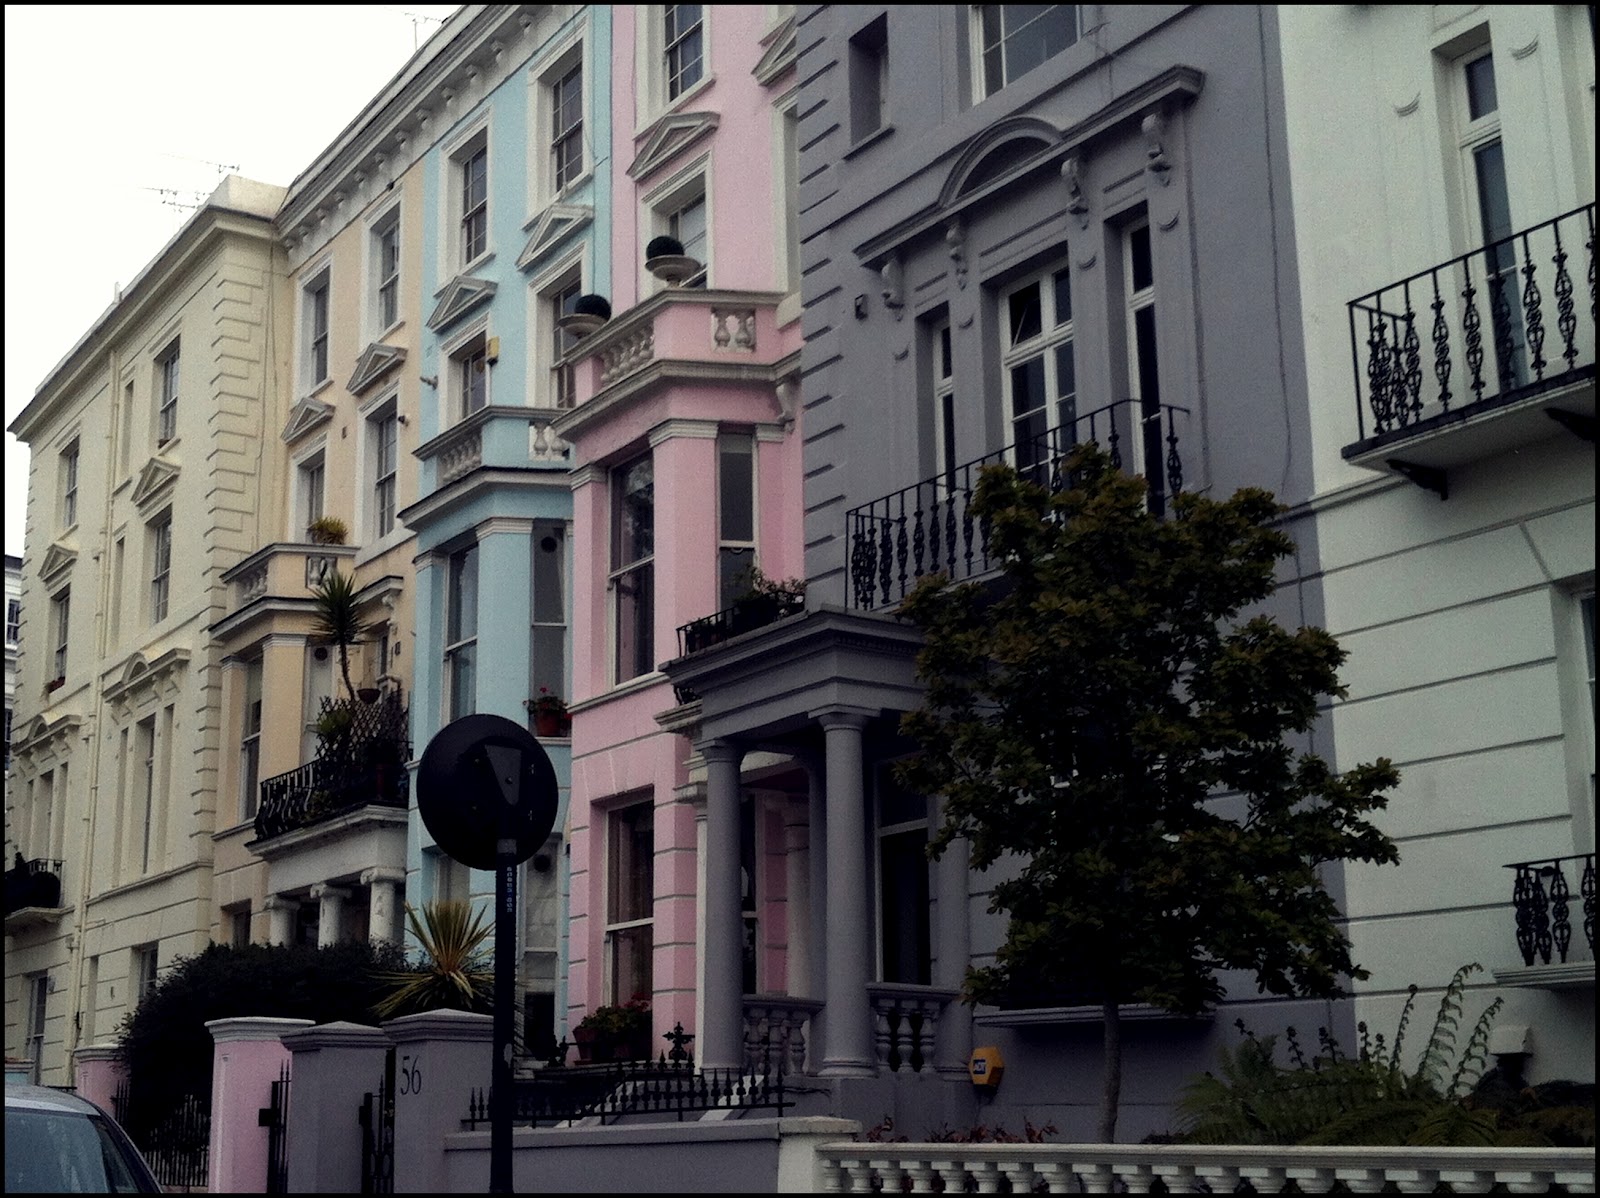 West London Glaziers, Notting Hill